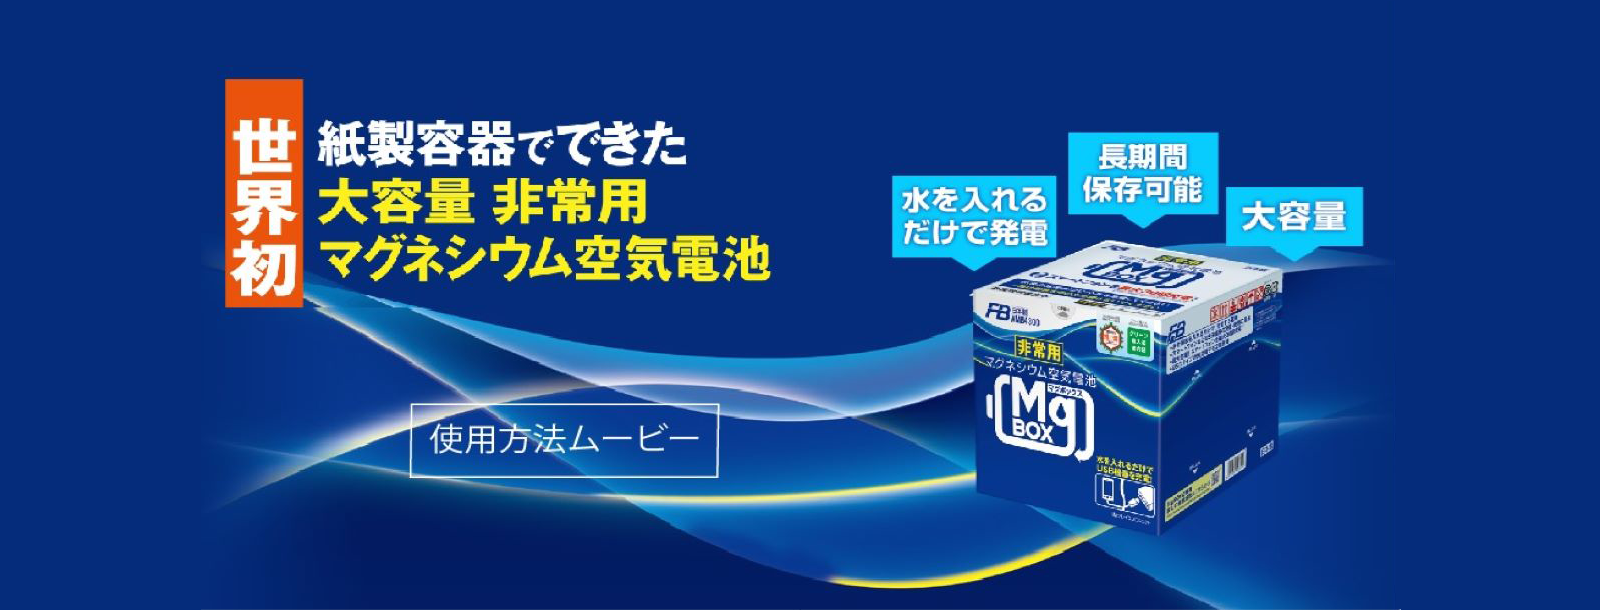 MgBOX（マグボックス） | 非常用・防災用電池「MgBOX」 | 製品情報 